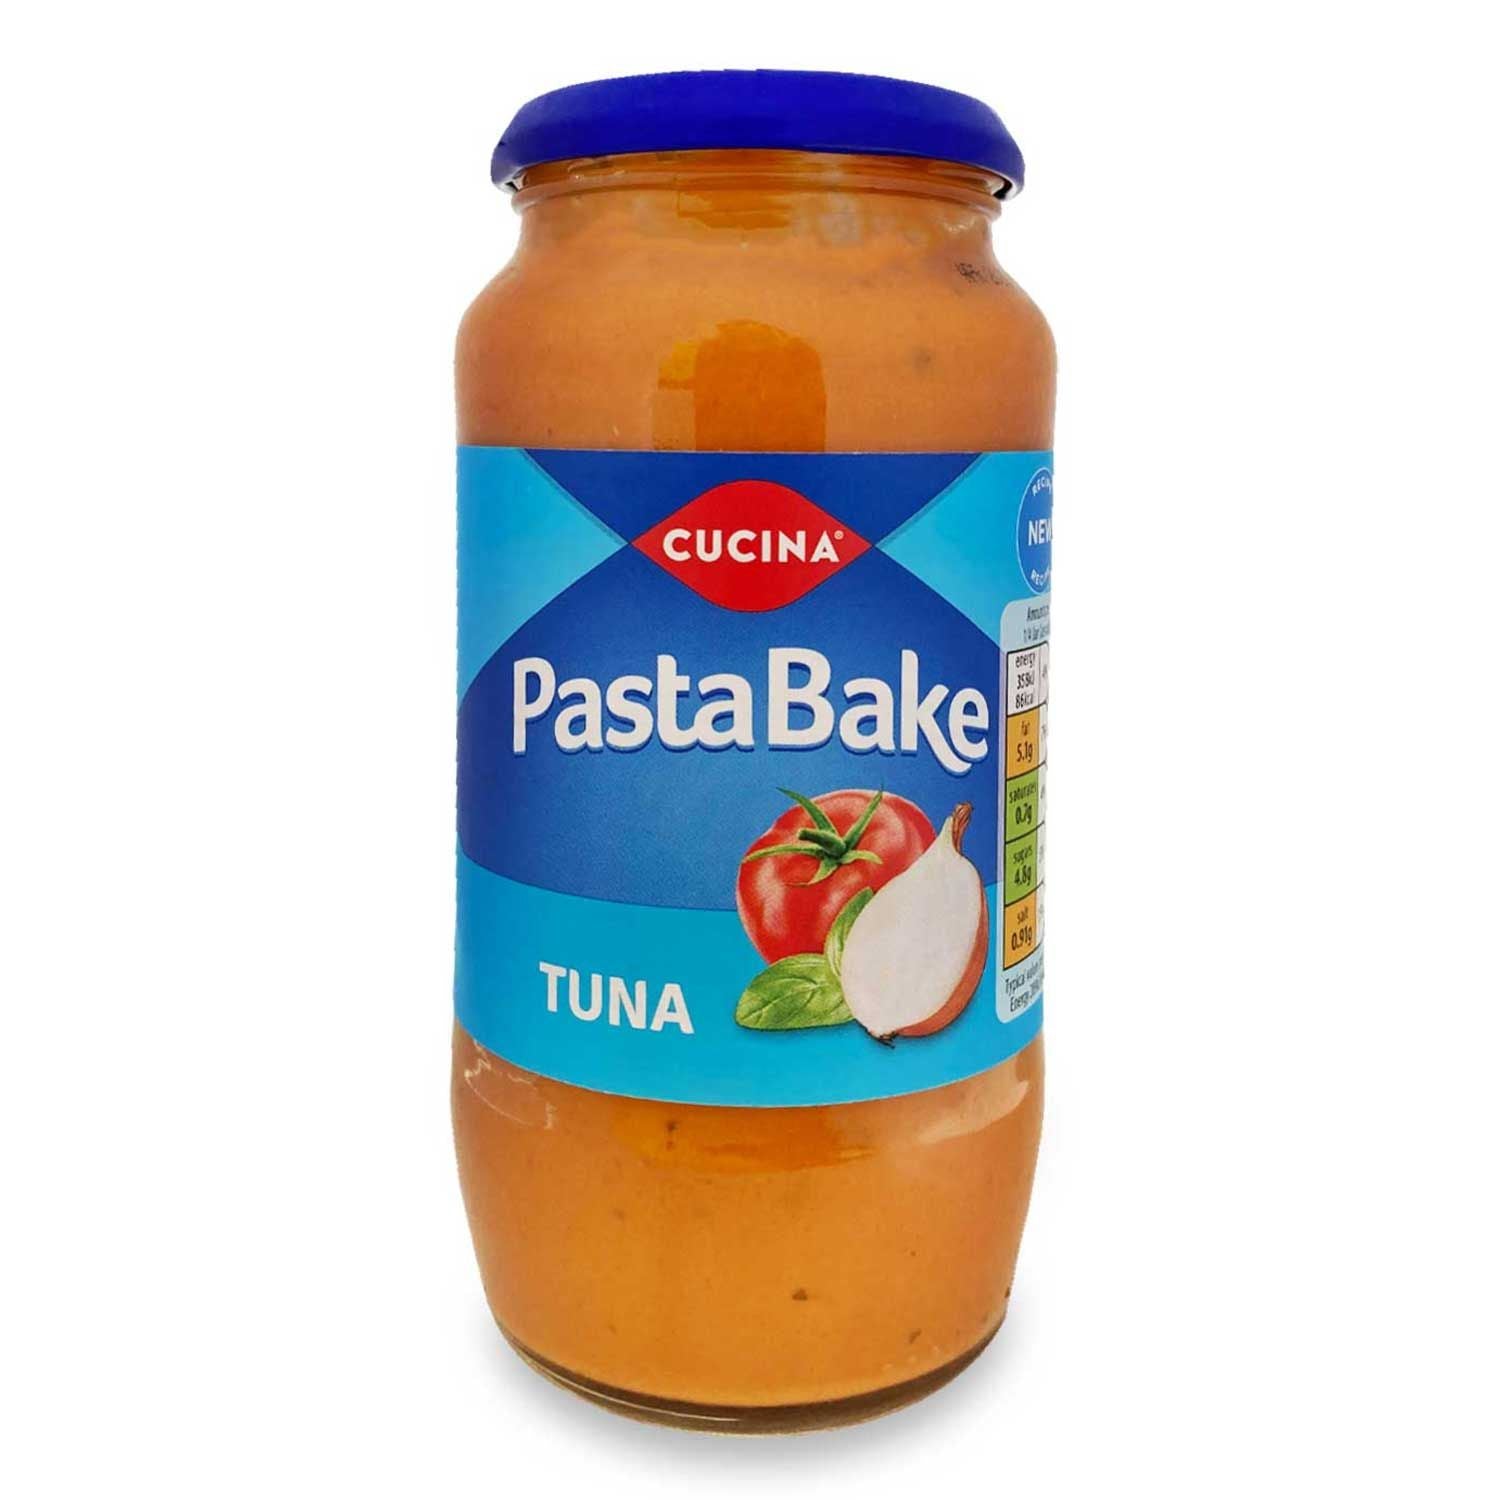 Cucina Pasta Bake Tuna 495g (2 Pack)